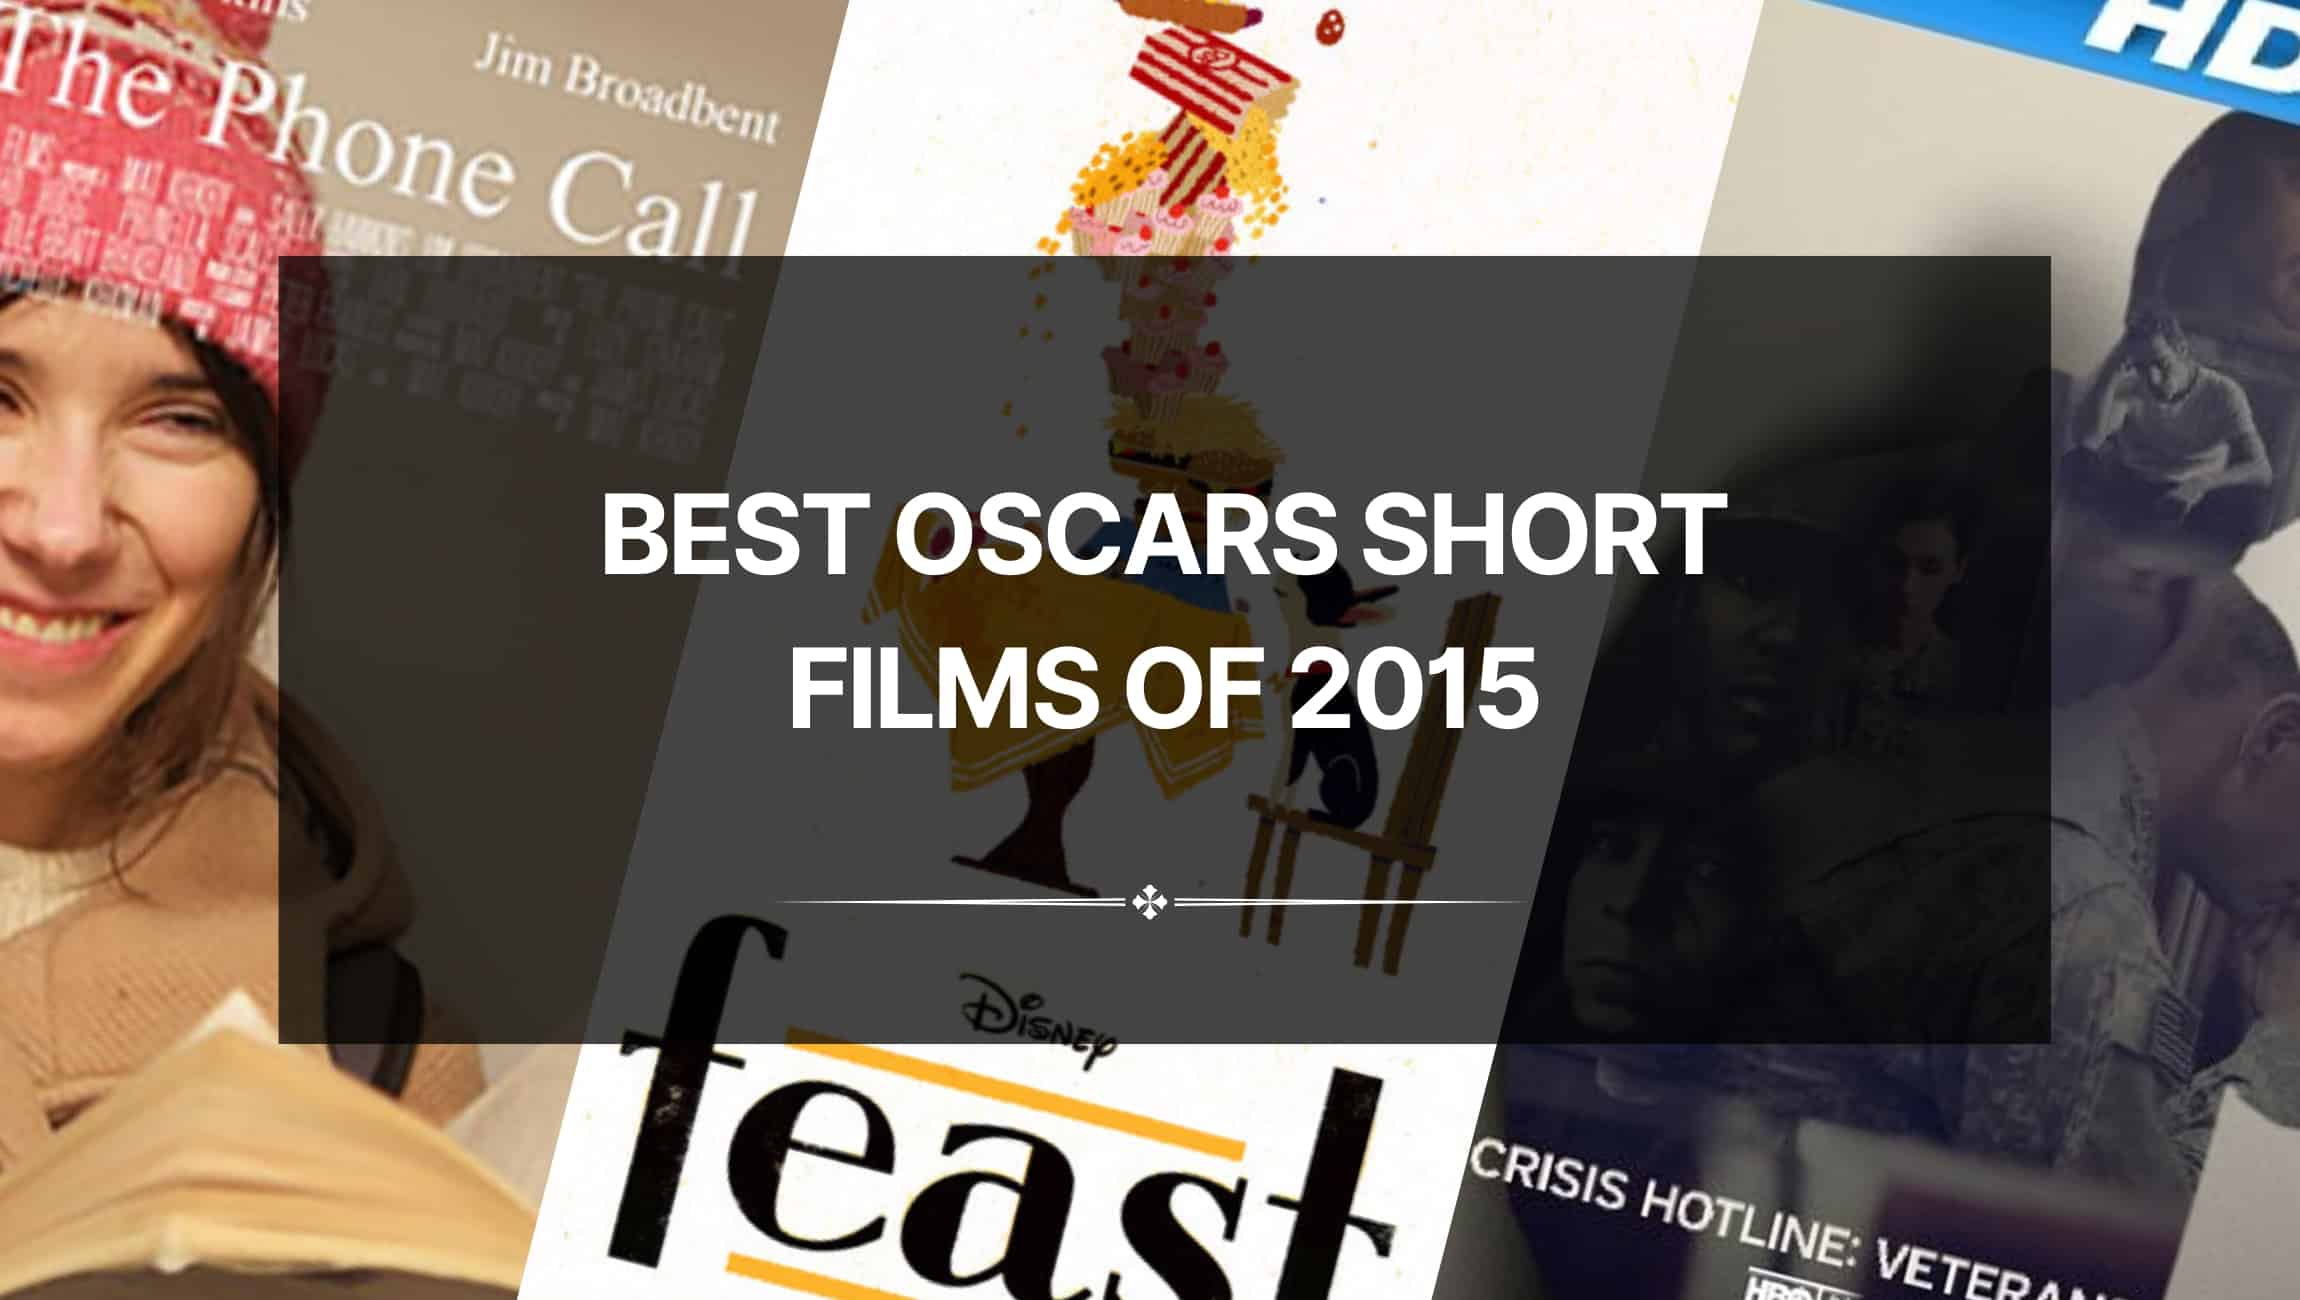 The Best Oscars Short Films of 2015: Inspirational Cinema